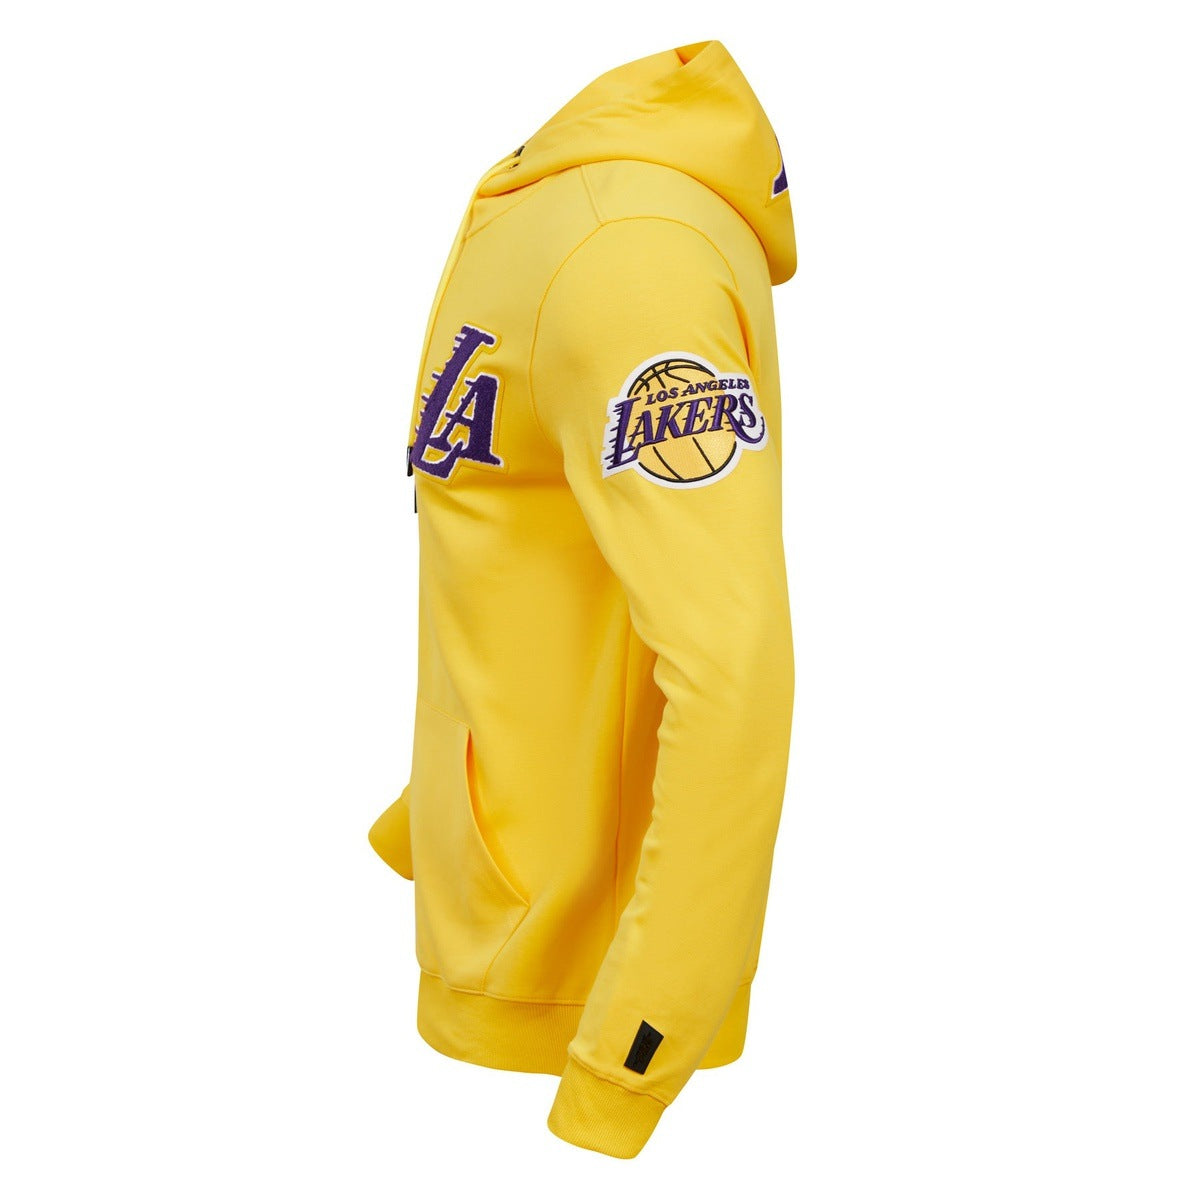 Urban Outfitters Los Angeles Lakers Chenille Vintage Lettering Hoodie  Sweatshirt for Men